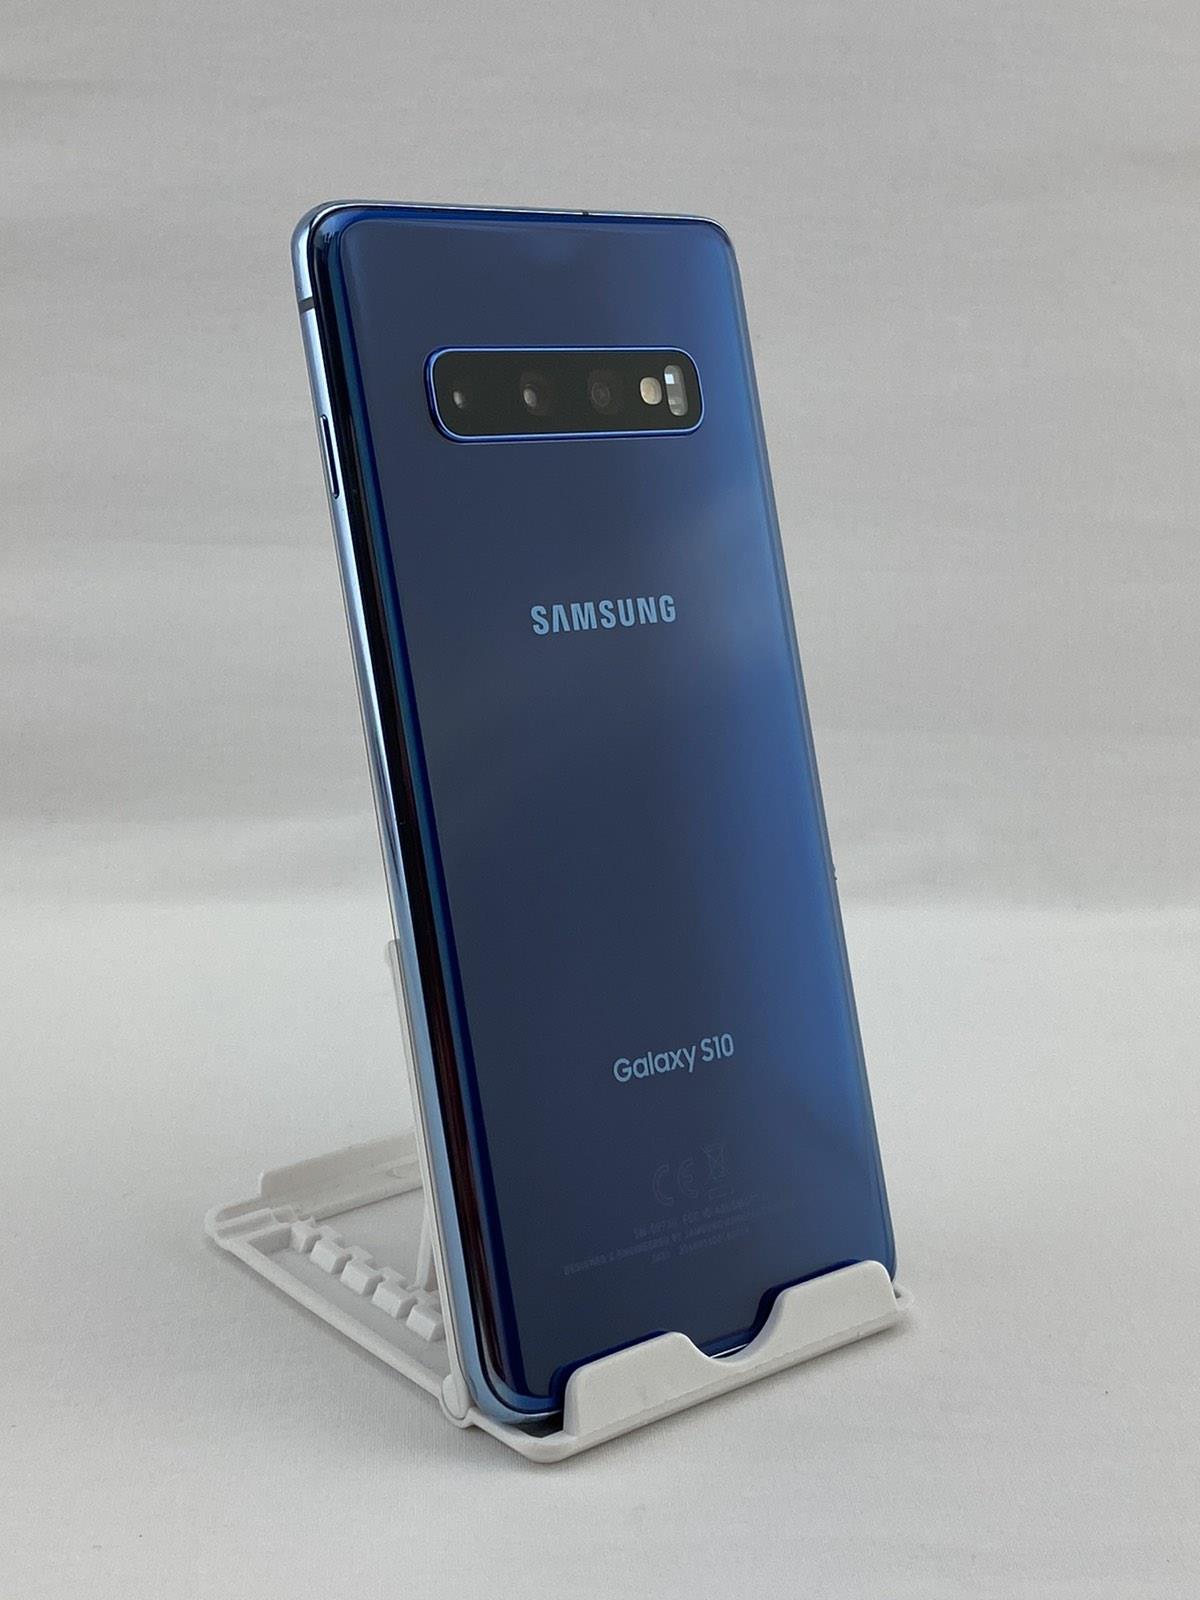 Samsung Galaxy S10 SM-G973U 128GB Prism Blue! For Verizon+GSM Carriers